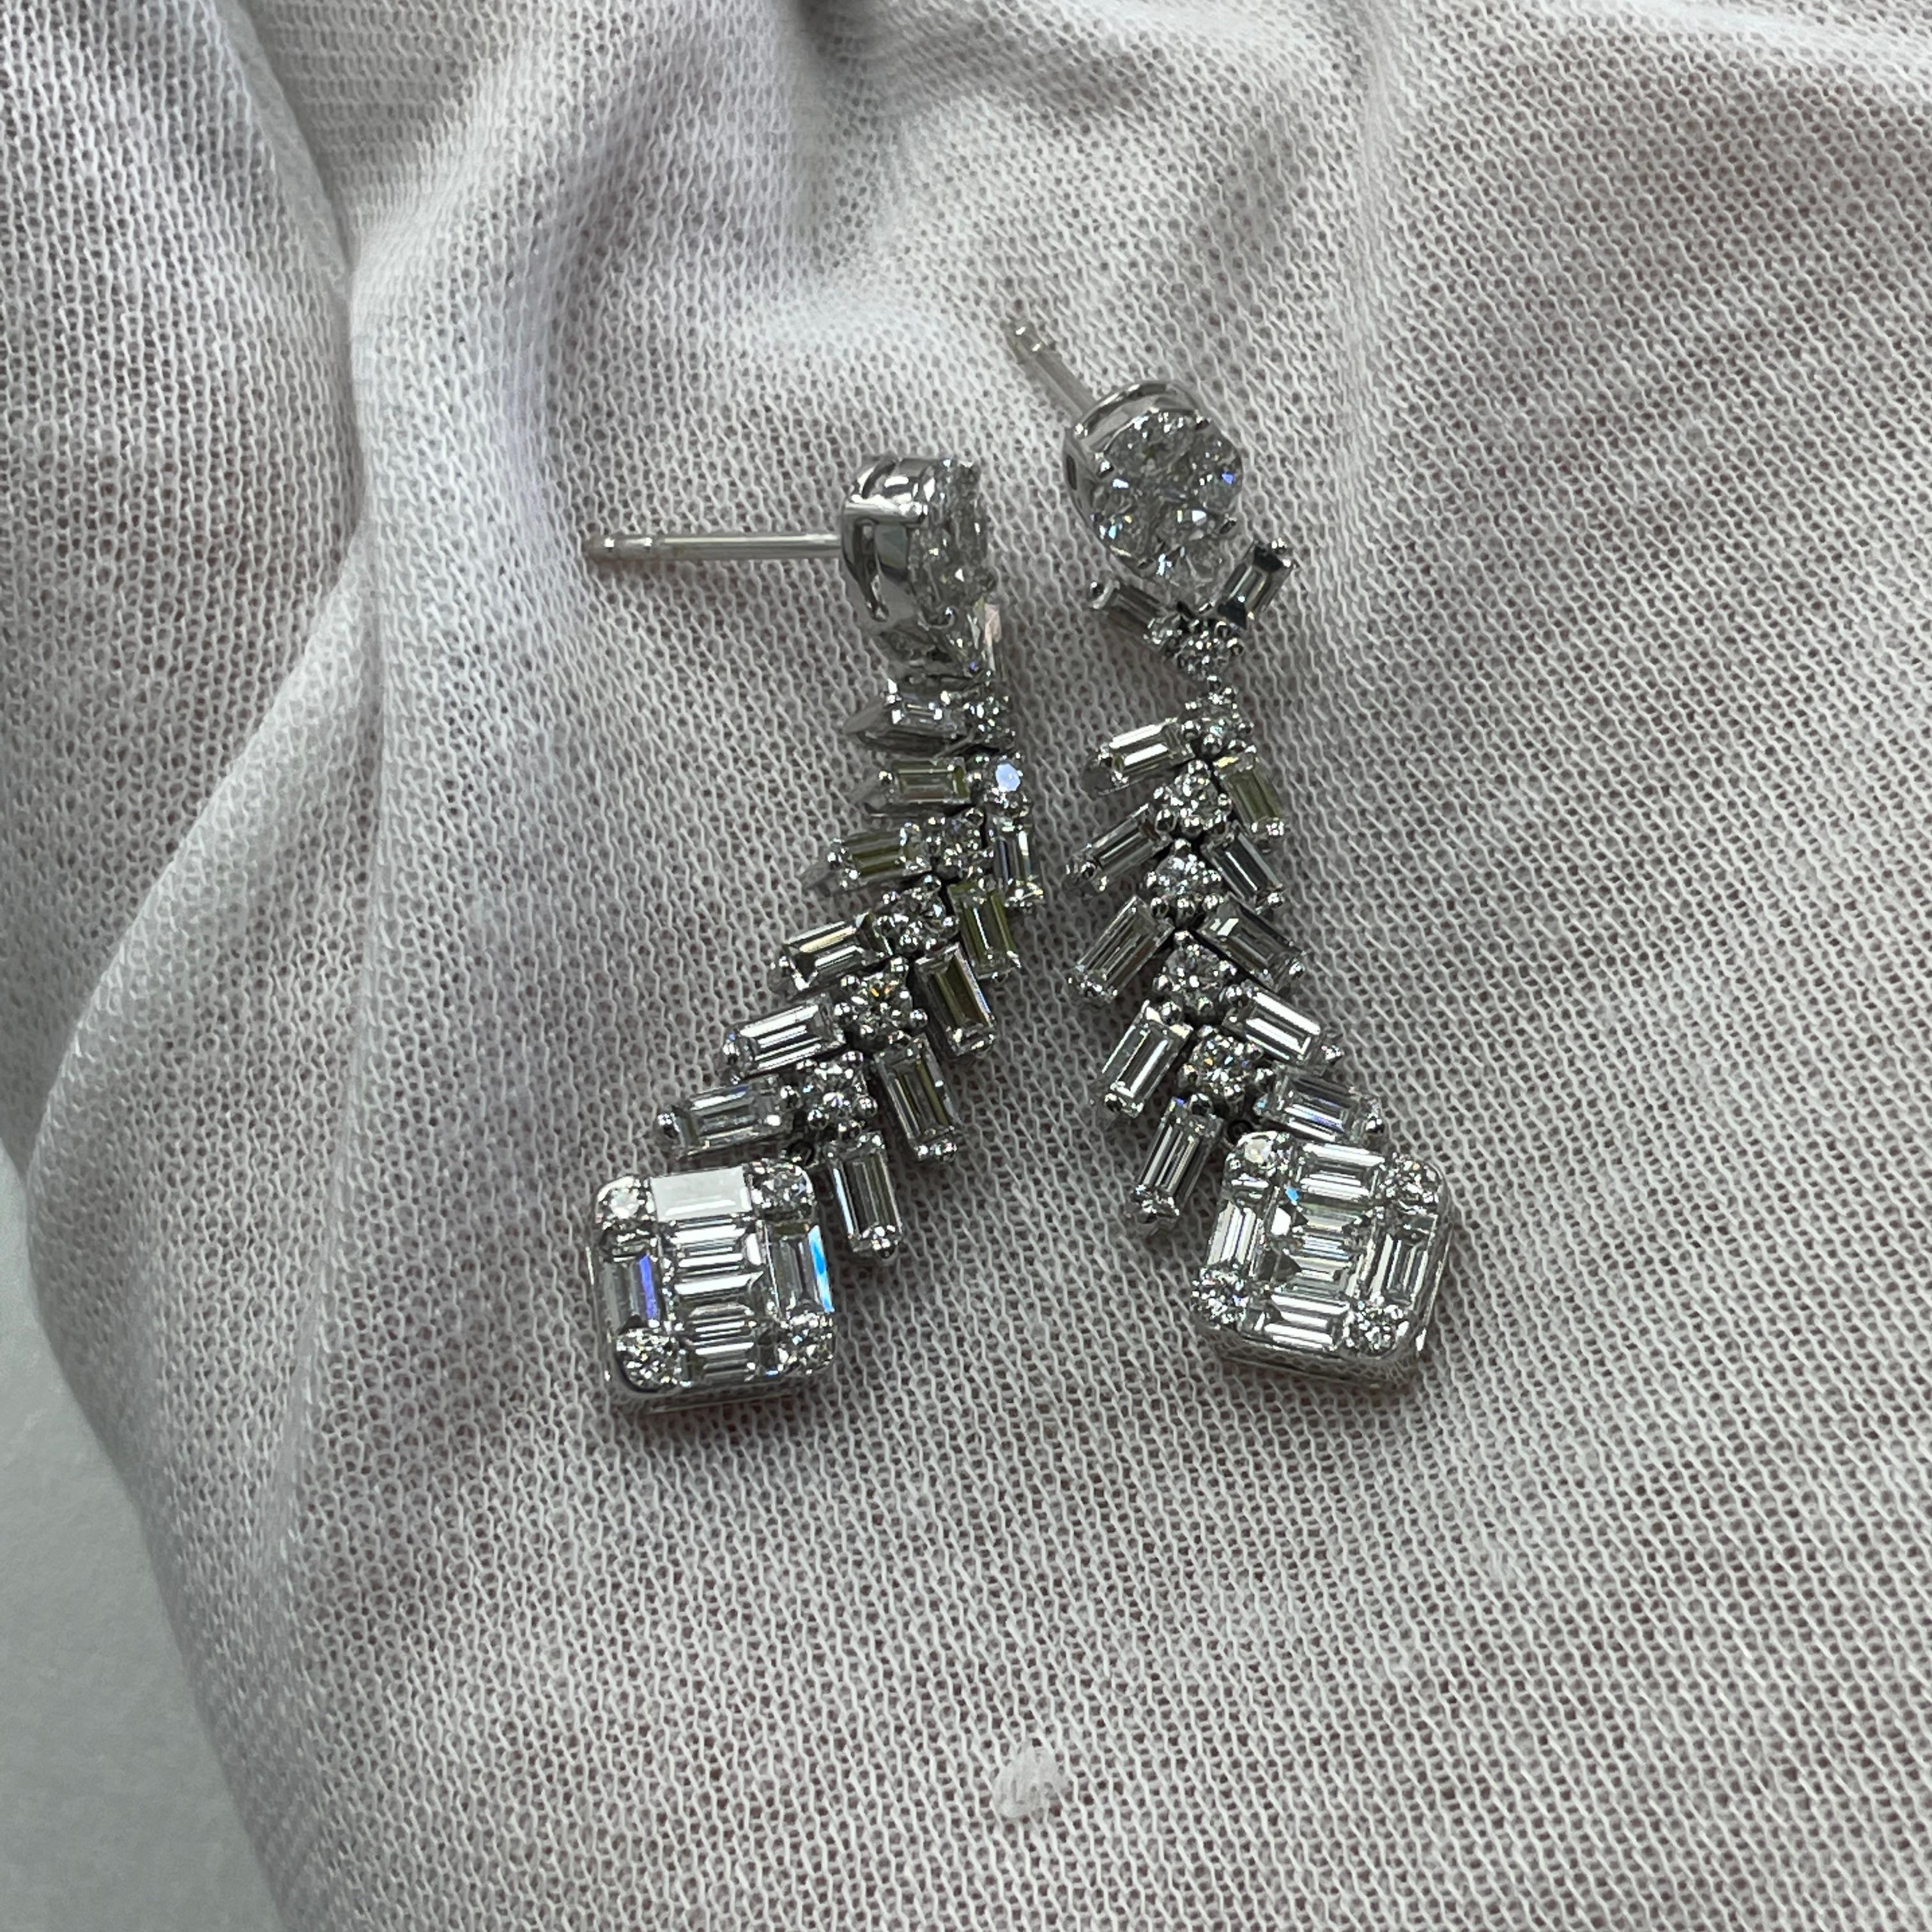 These elegant 18K white gold dangling earrings carry 3.52Ct of brilliant white diamonds